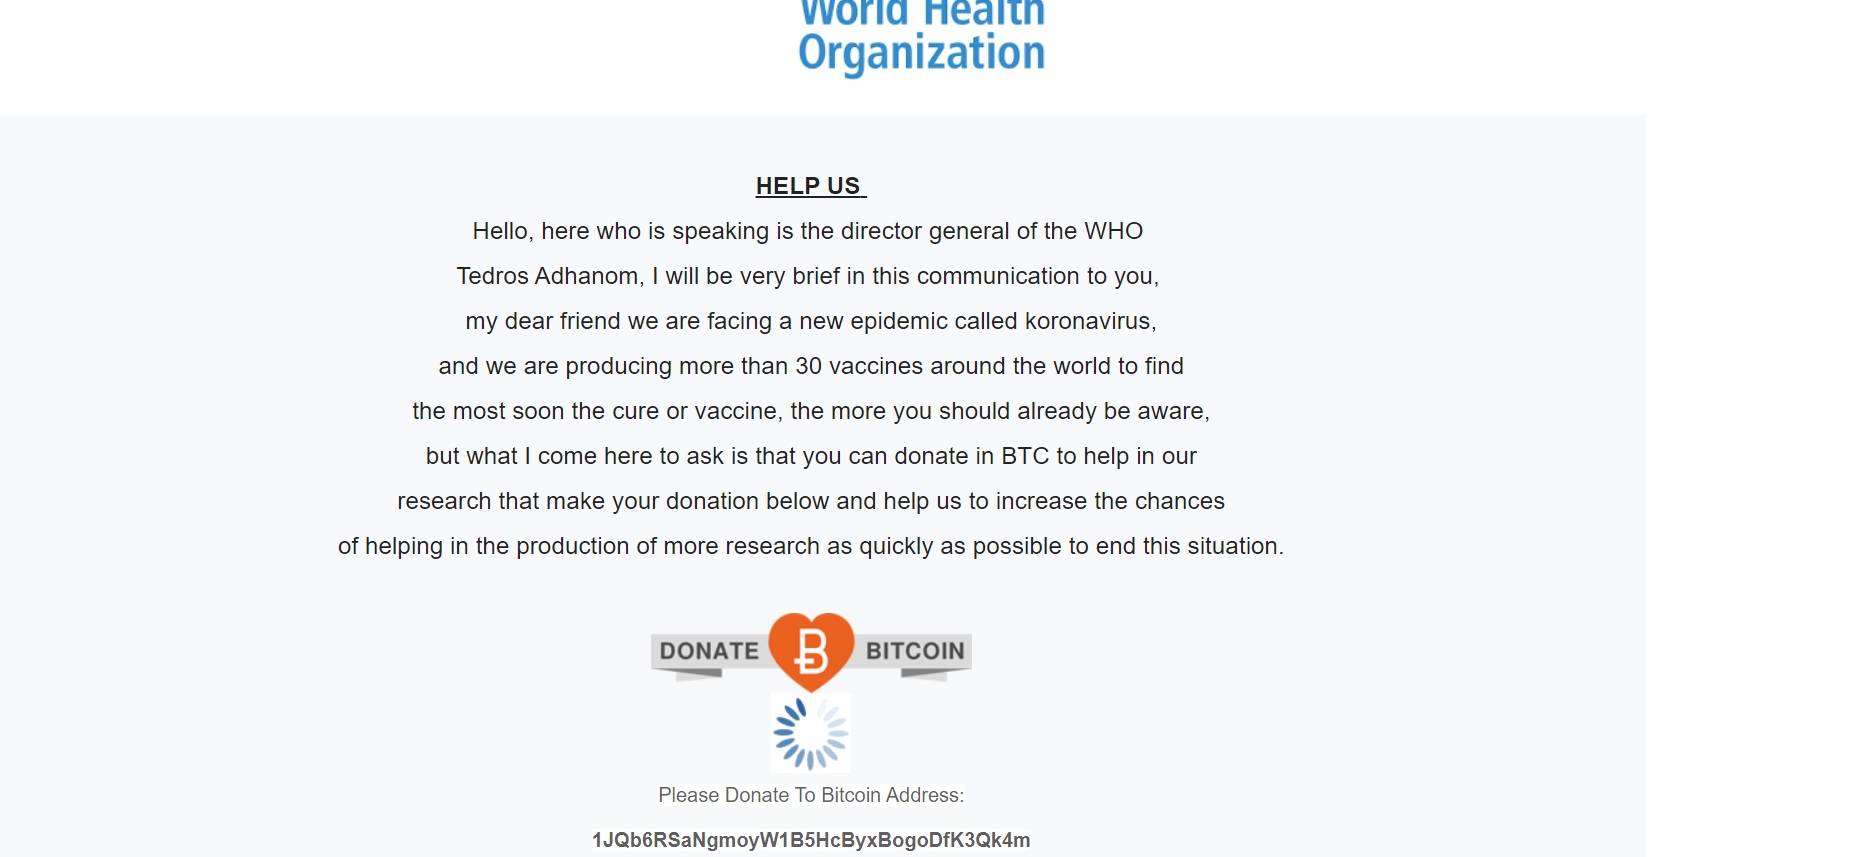 A Fake WHO Help Us Donate via Bitcoin Email